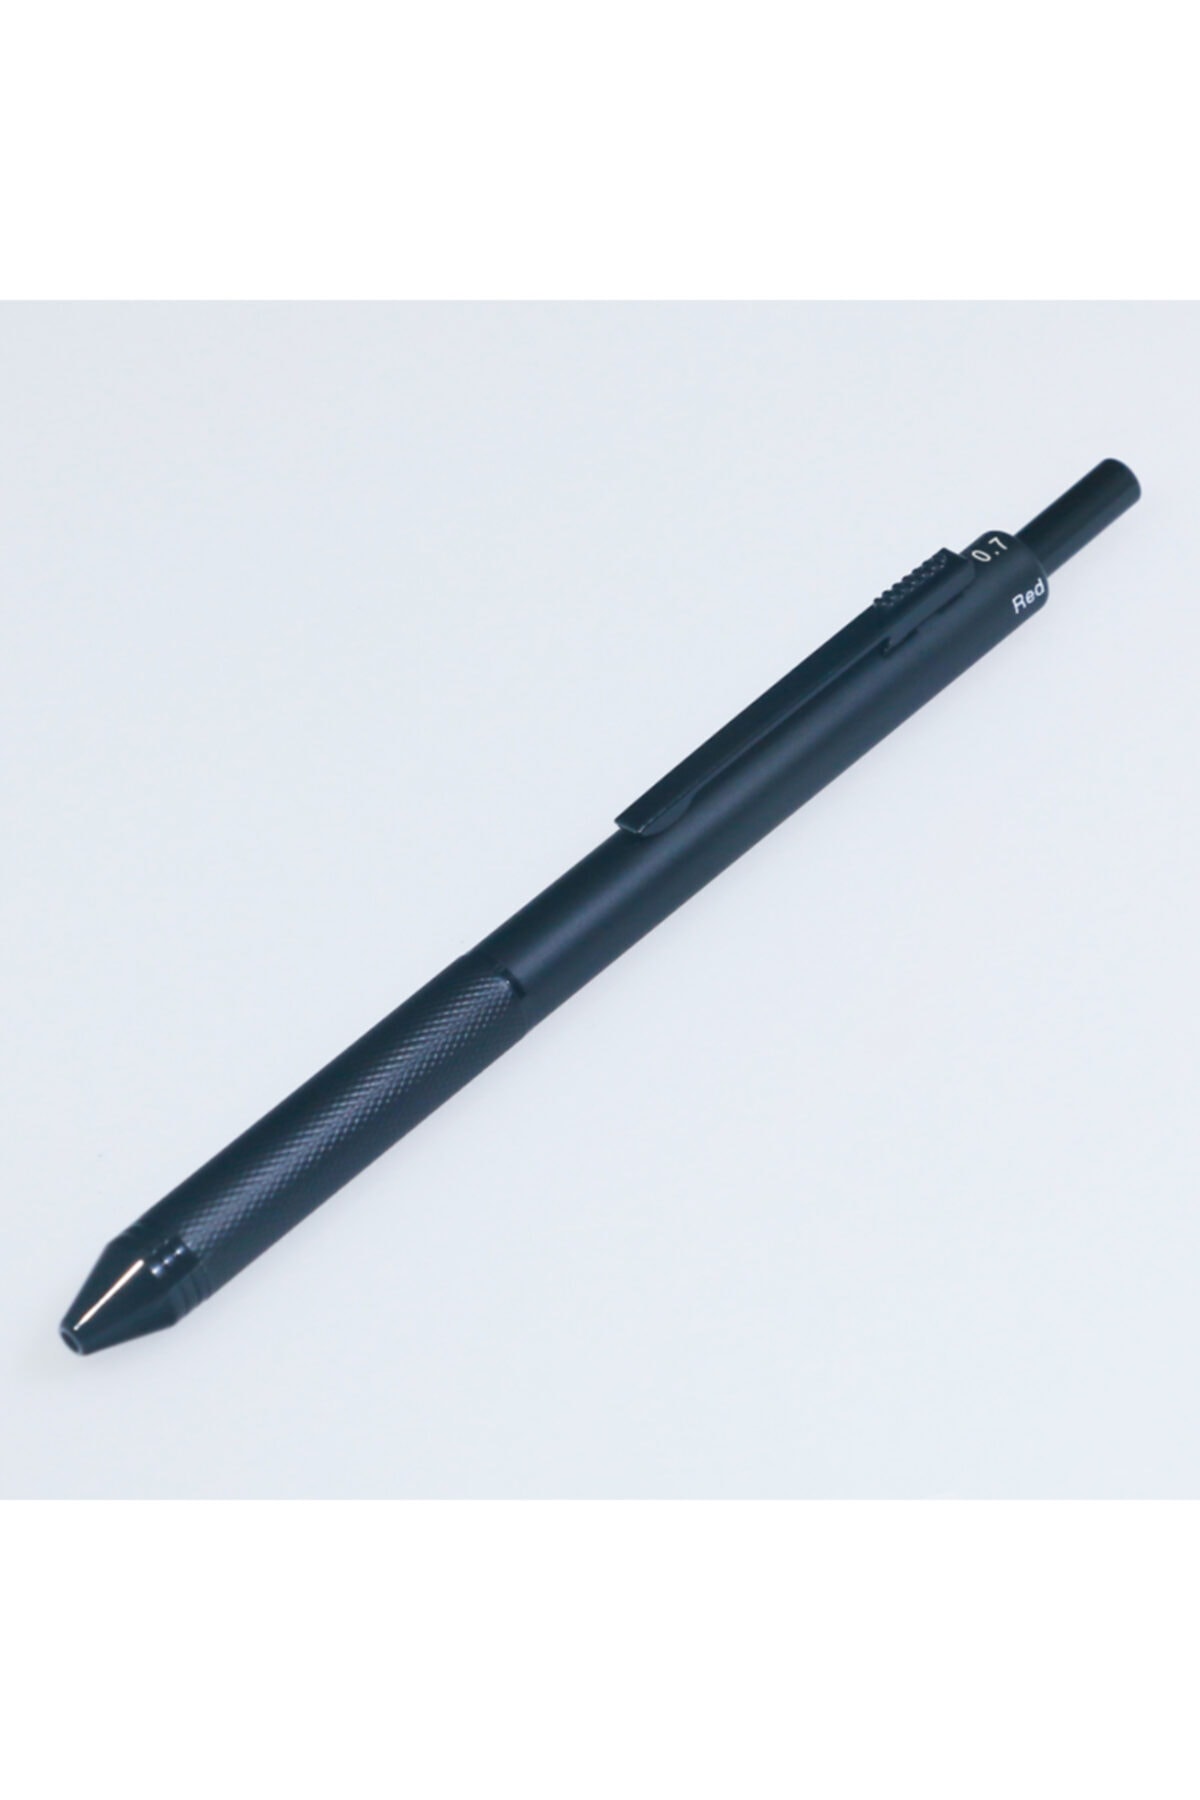 NOUT Çok Fonksiyonlu Metal Kalem 4 In 1 (üç Renk Tükenmez Kalem Ve 0,7 Mm Versatil Kalem)